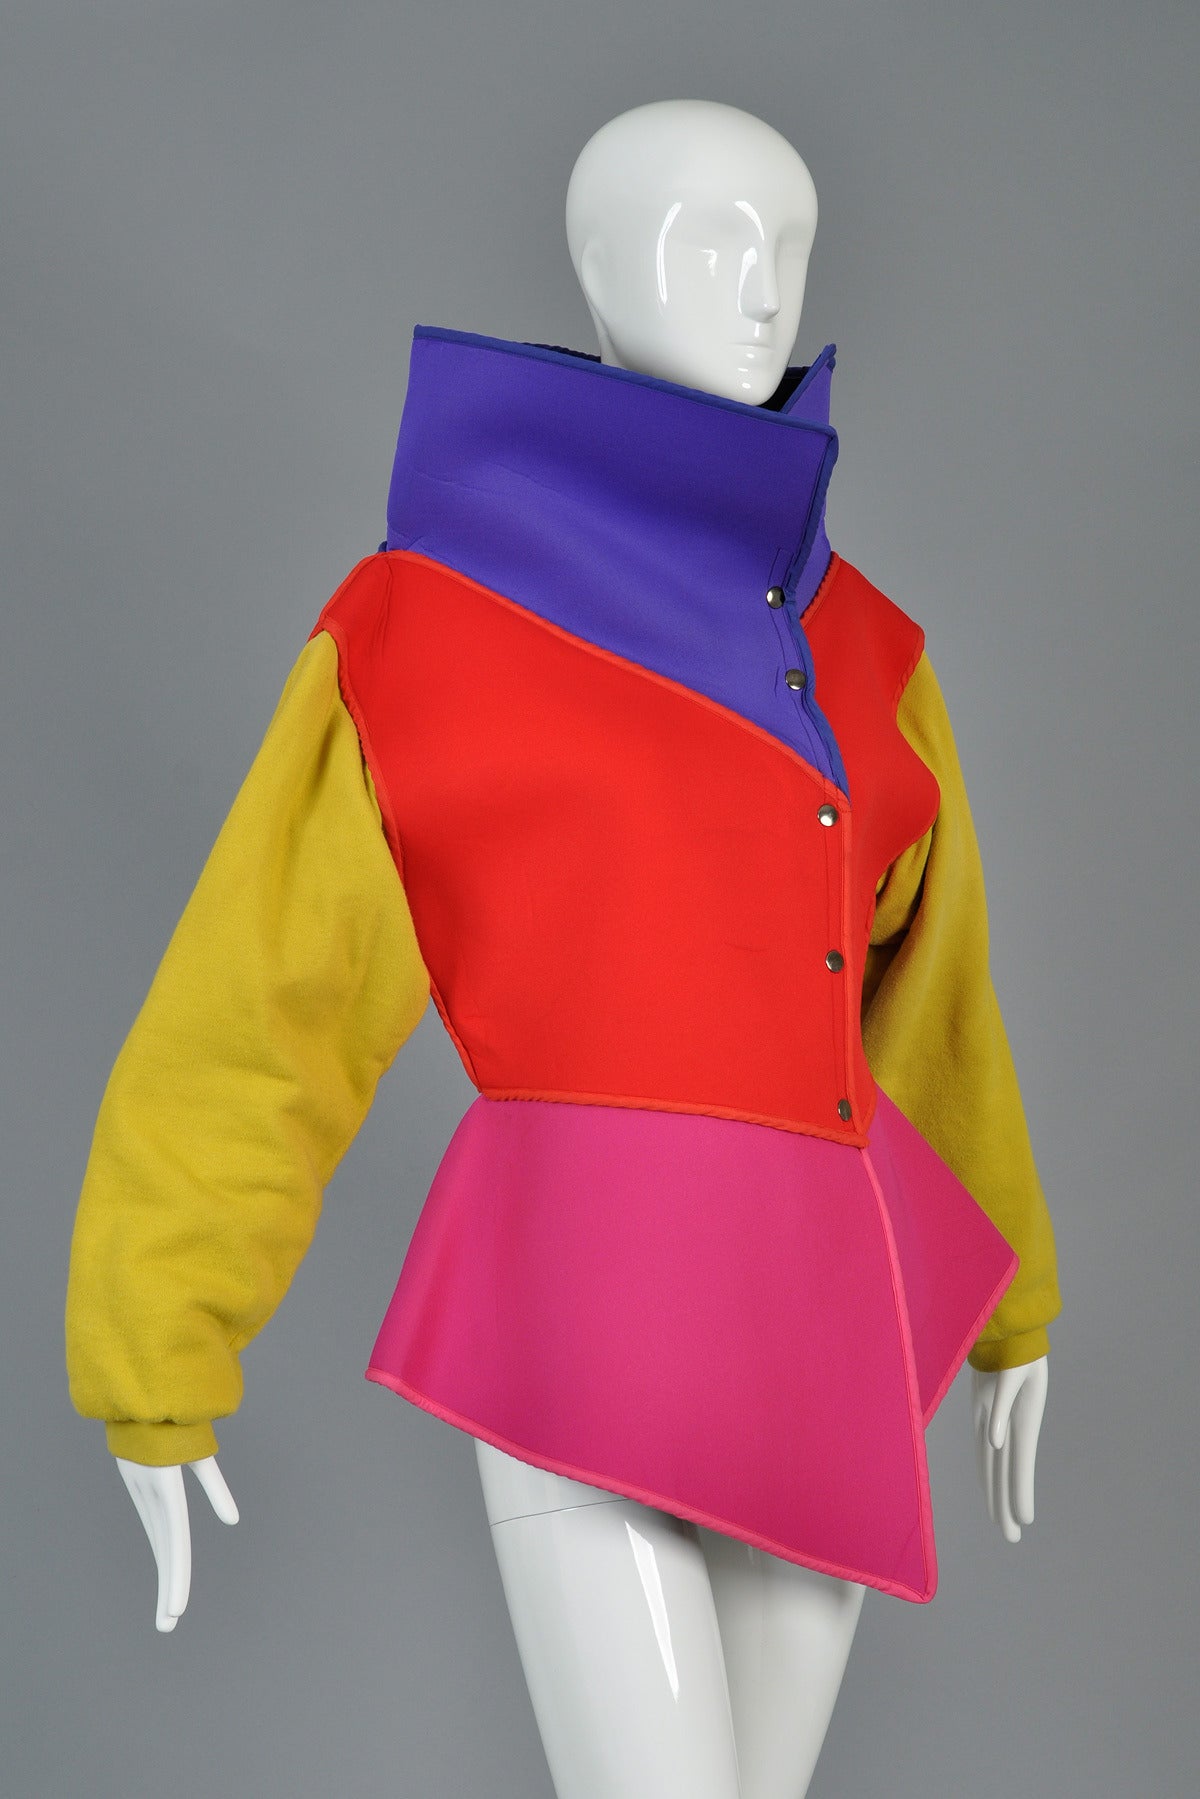 Circa 1983/84 Kansai Yamamoto Colorblocked Neoprene Jacket 1